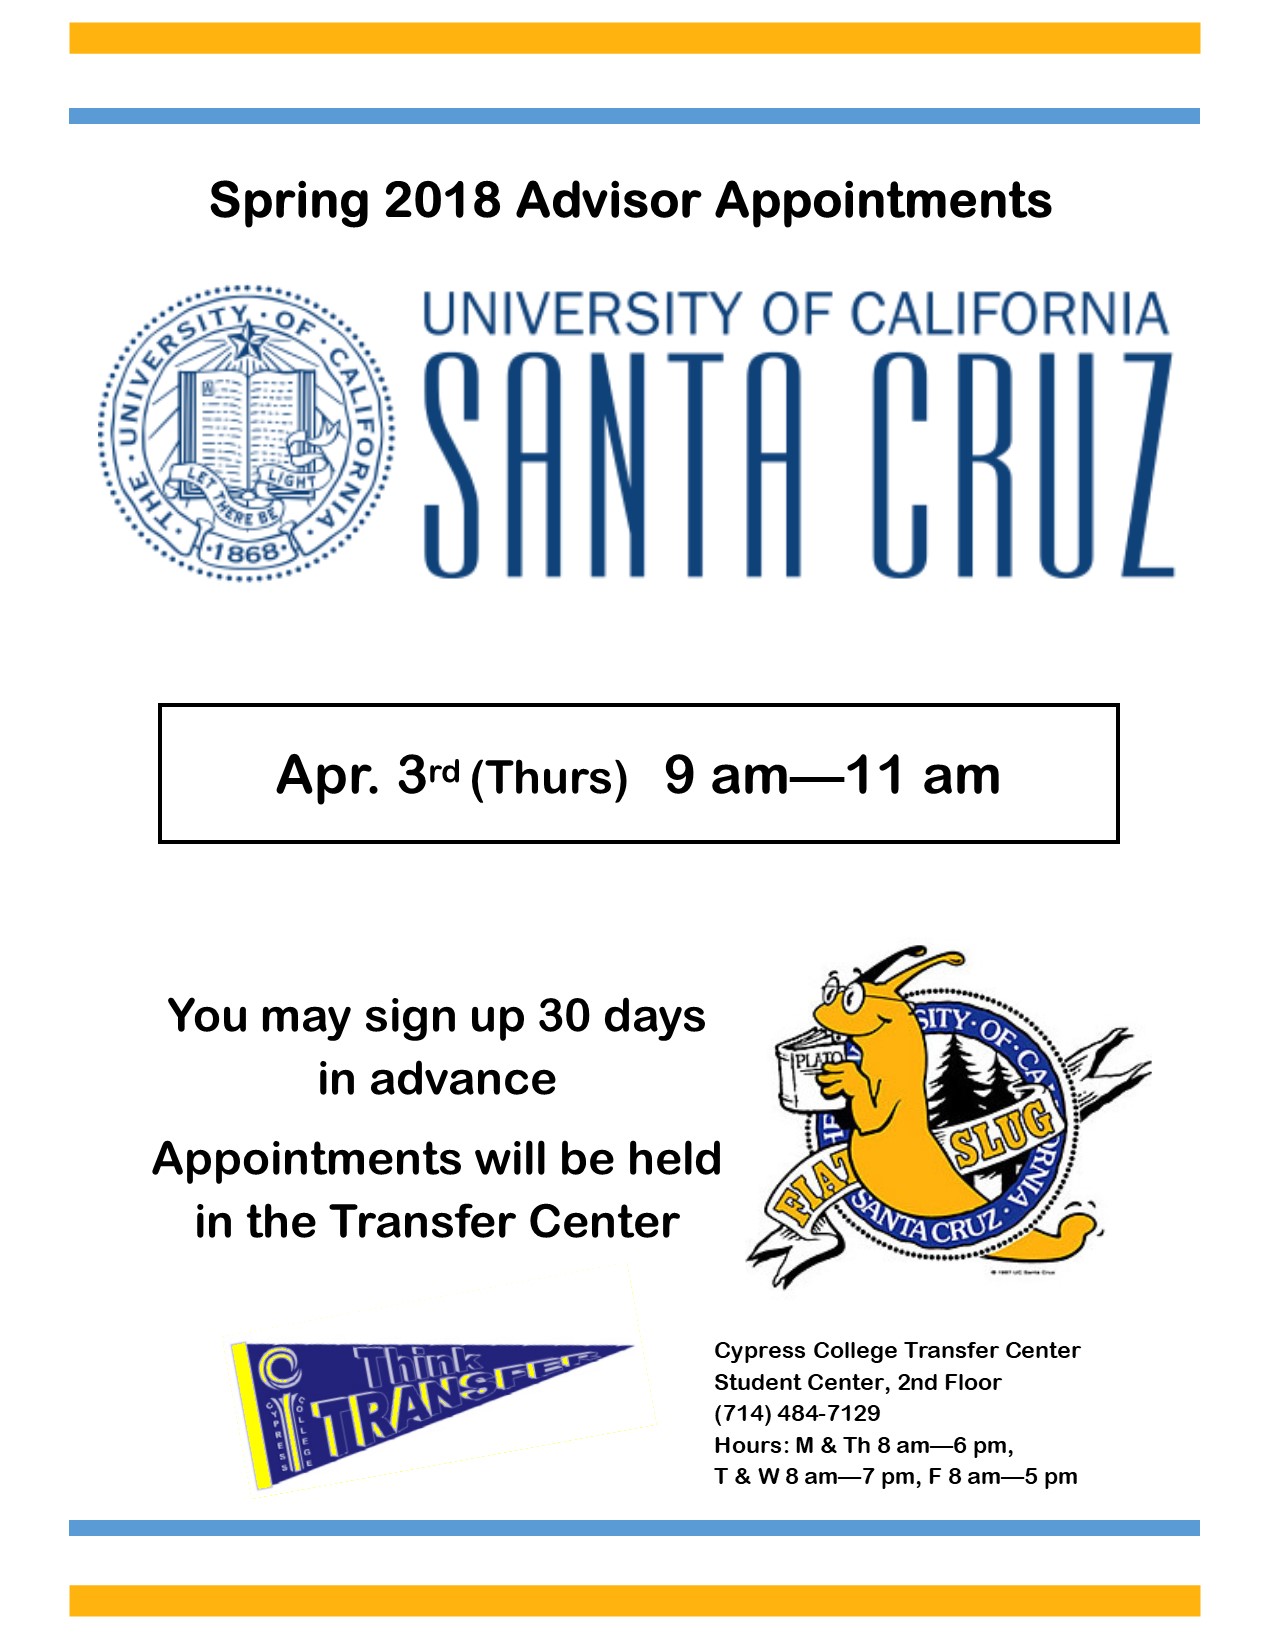 UC Santa Cruz Advisor Appointment